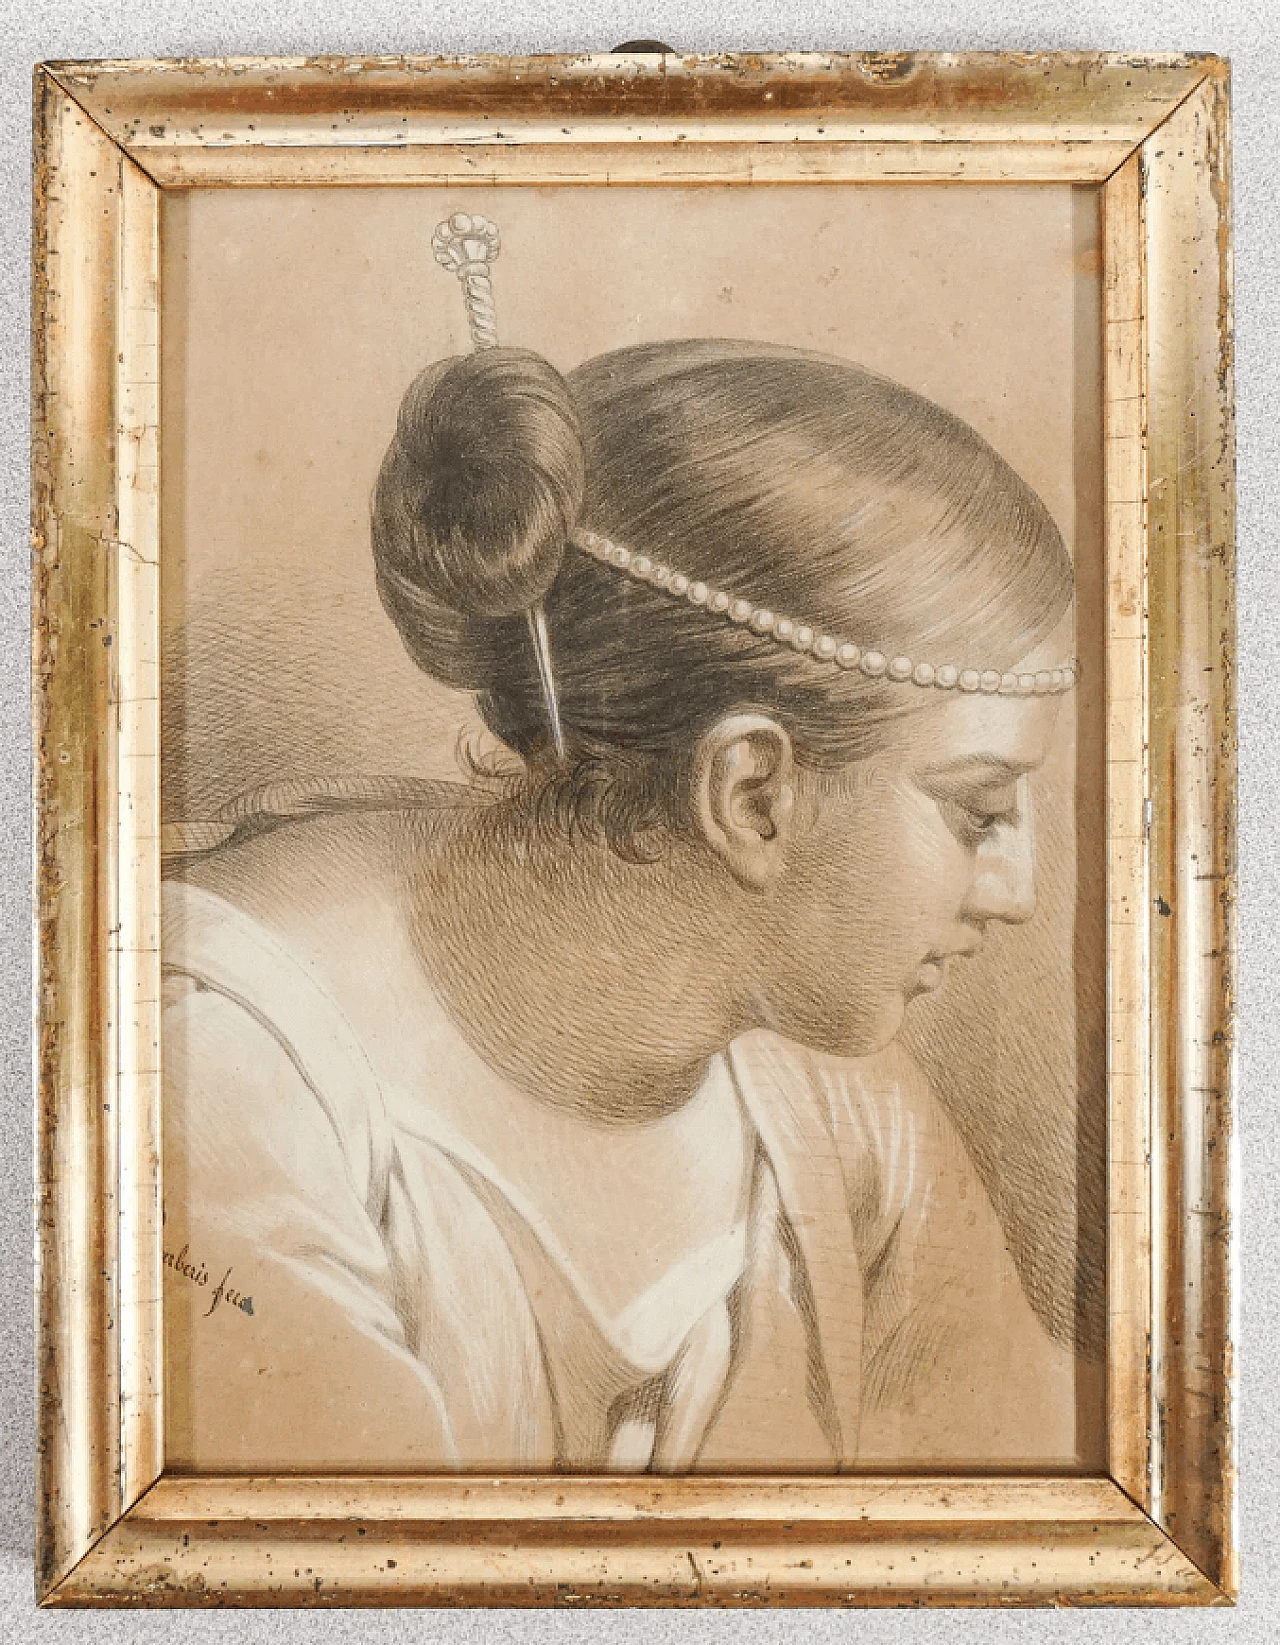 Antonio Barberis, Portrait of a Woman, pencil on paper, 19th century 2